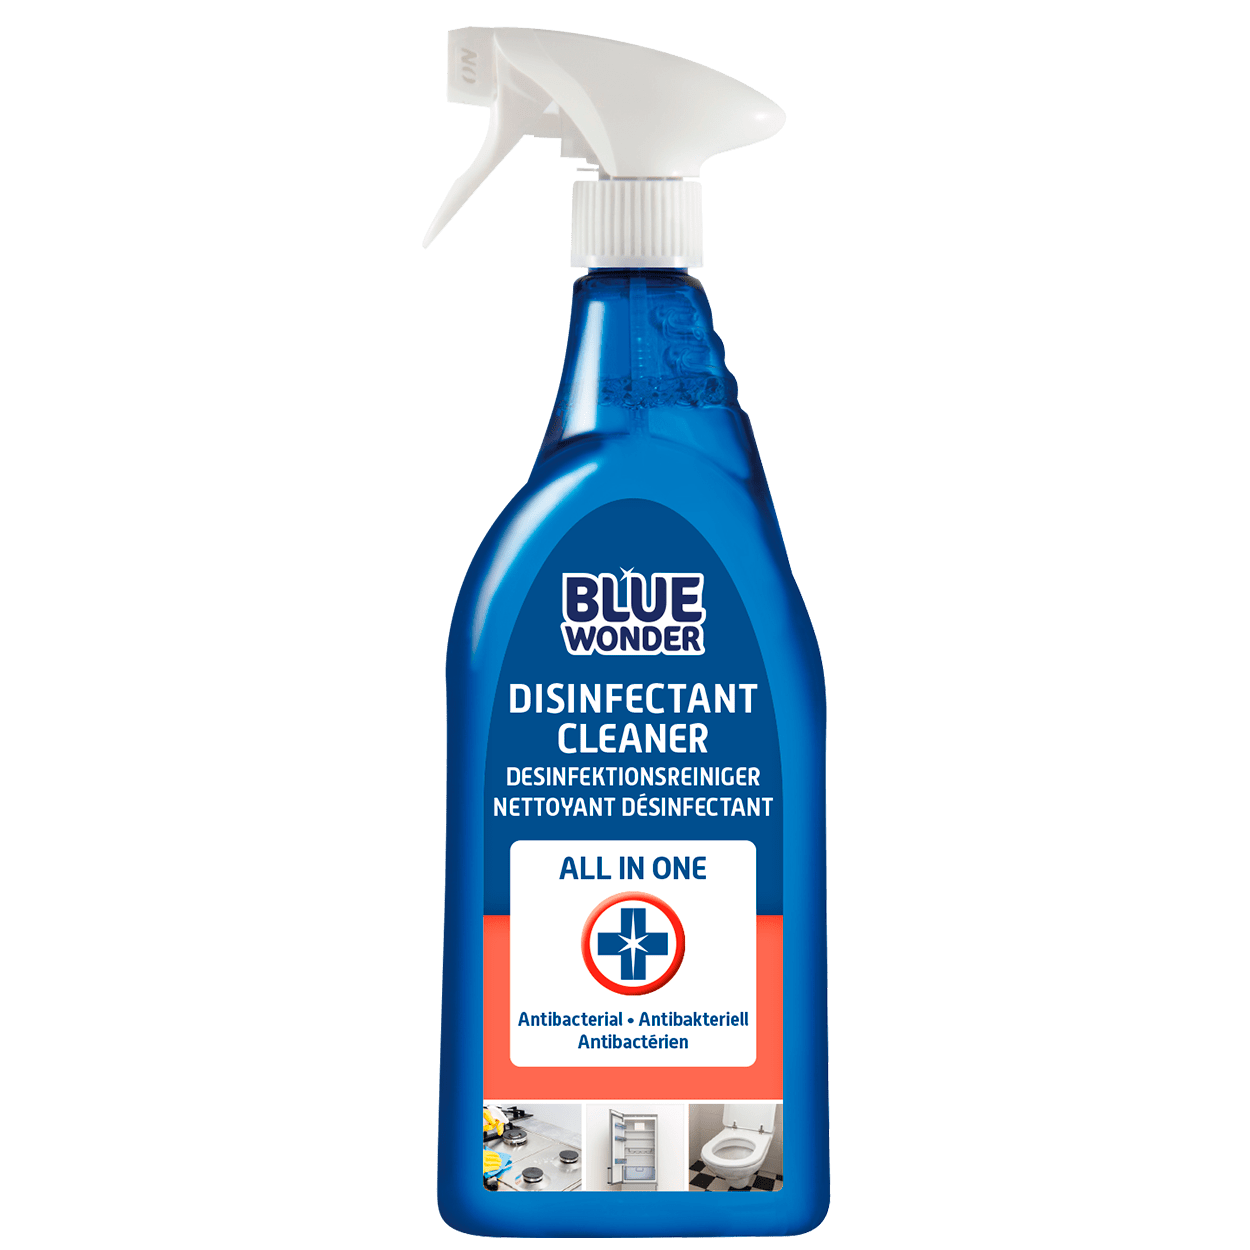 Blue Wonder Disinfectant cleaner Desinfektionsreiniger Nettoyant Desinfectant spray 750ml front